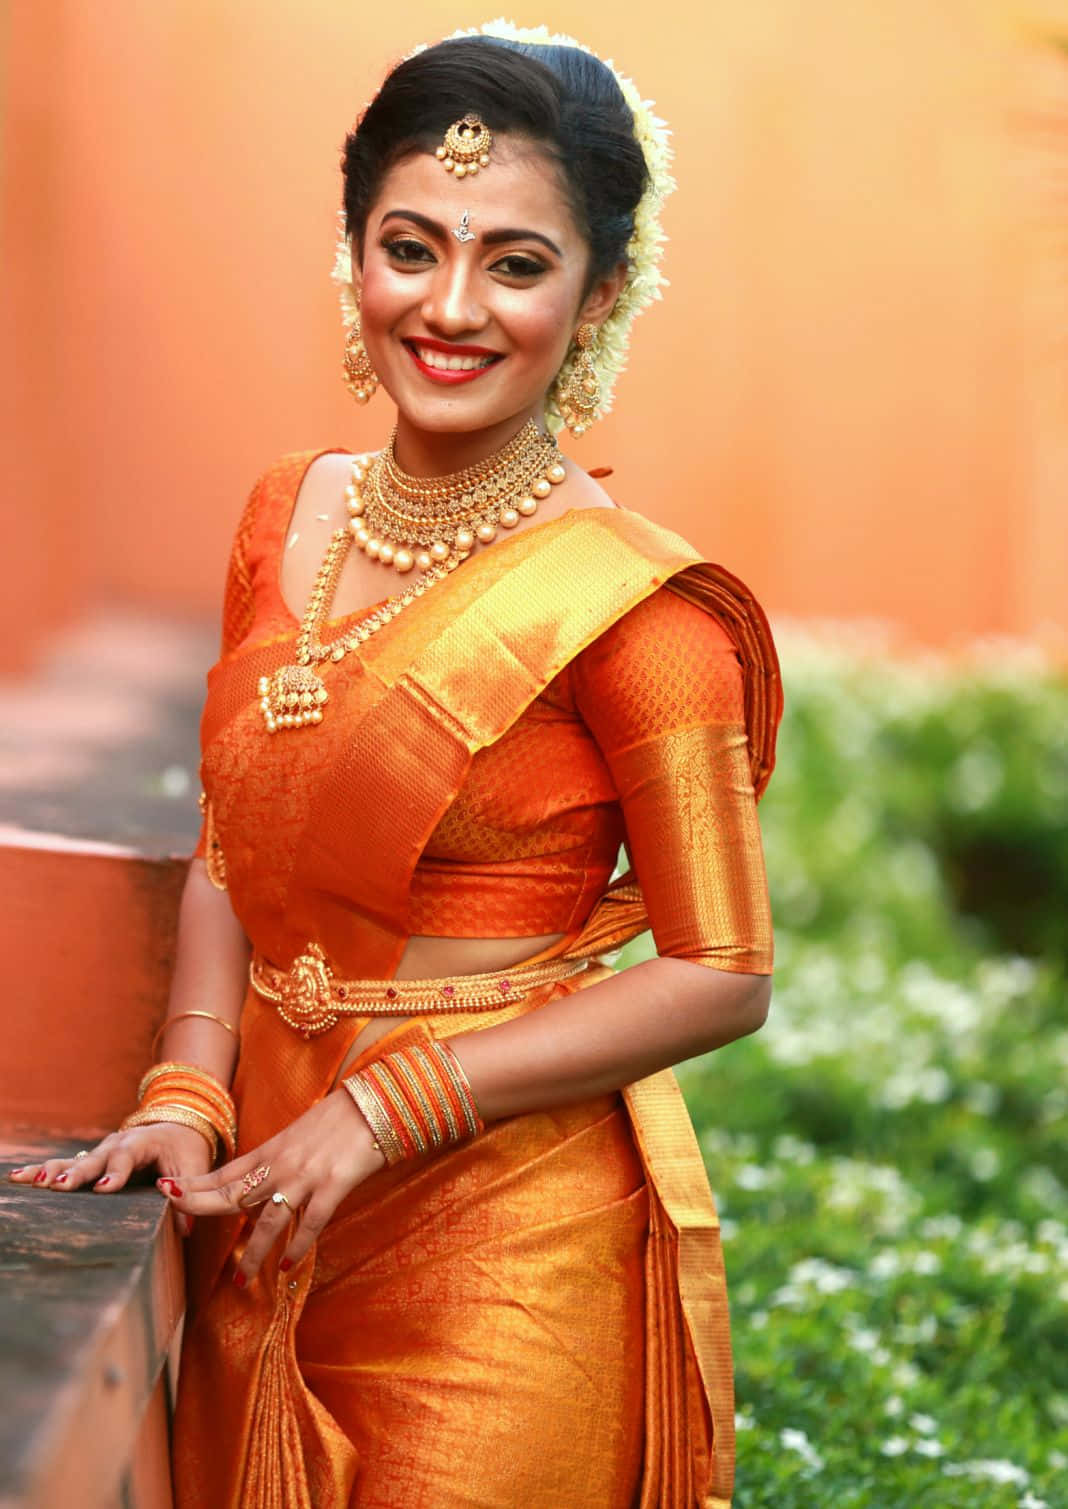 Imagende Una Novia India Con Vestido Naranja